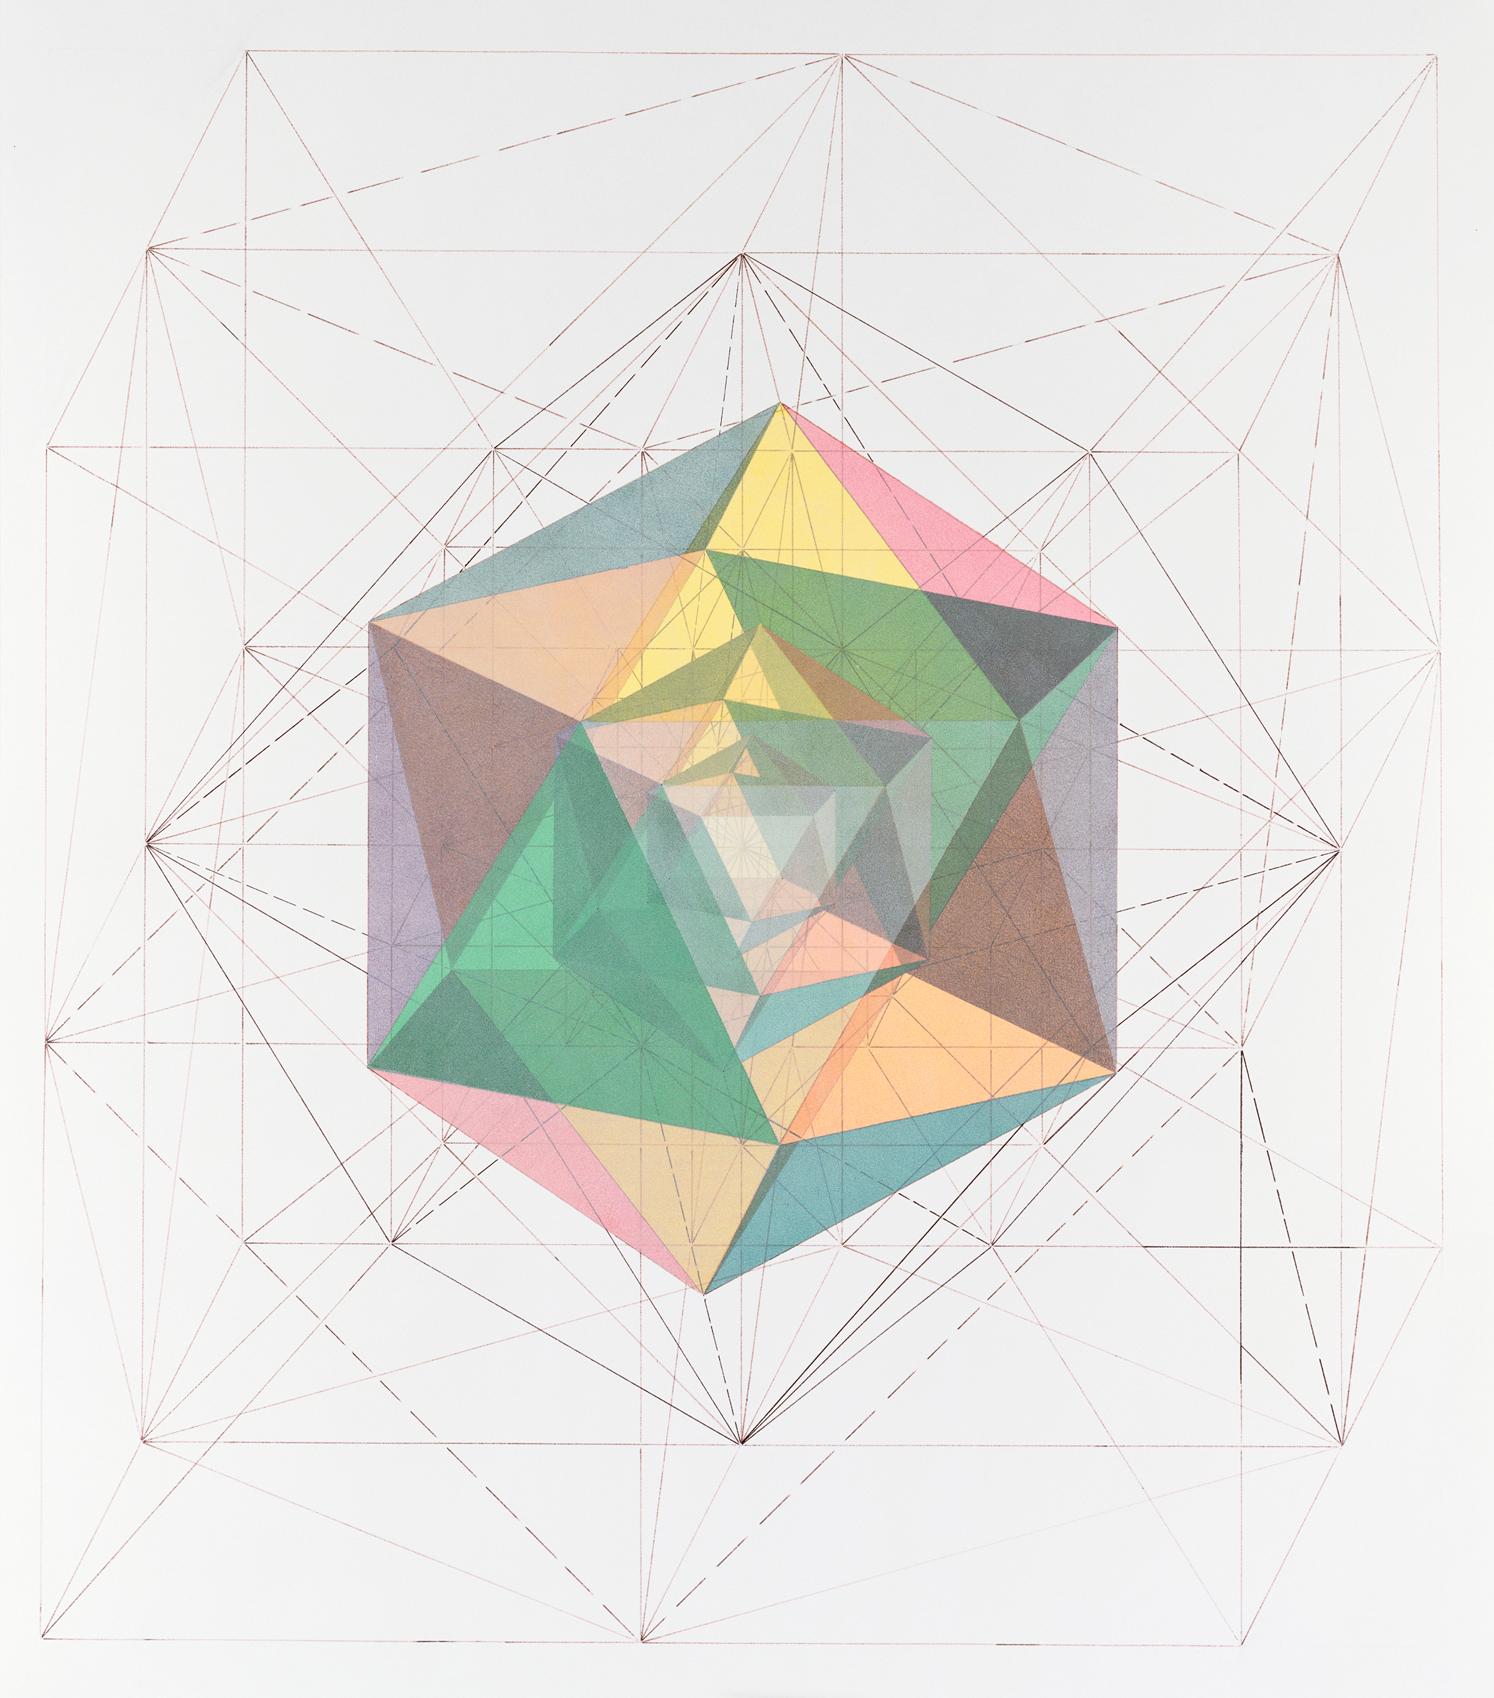 Image for entry 'Print of Chrome 190 : Three Icosahedra'